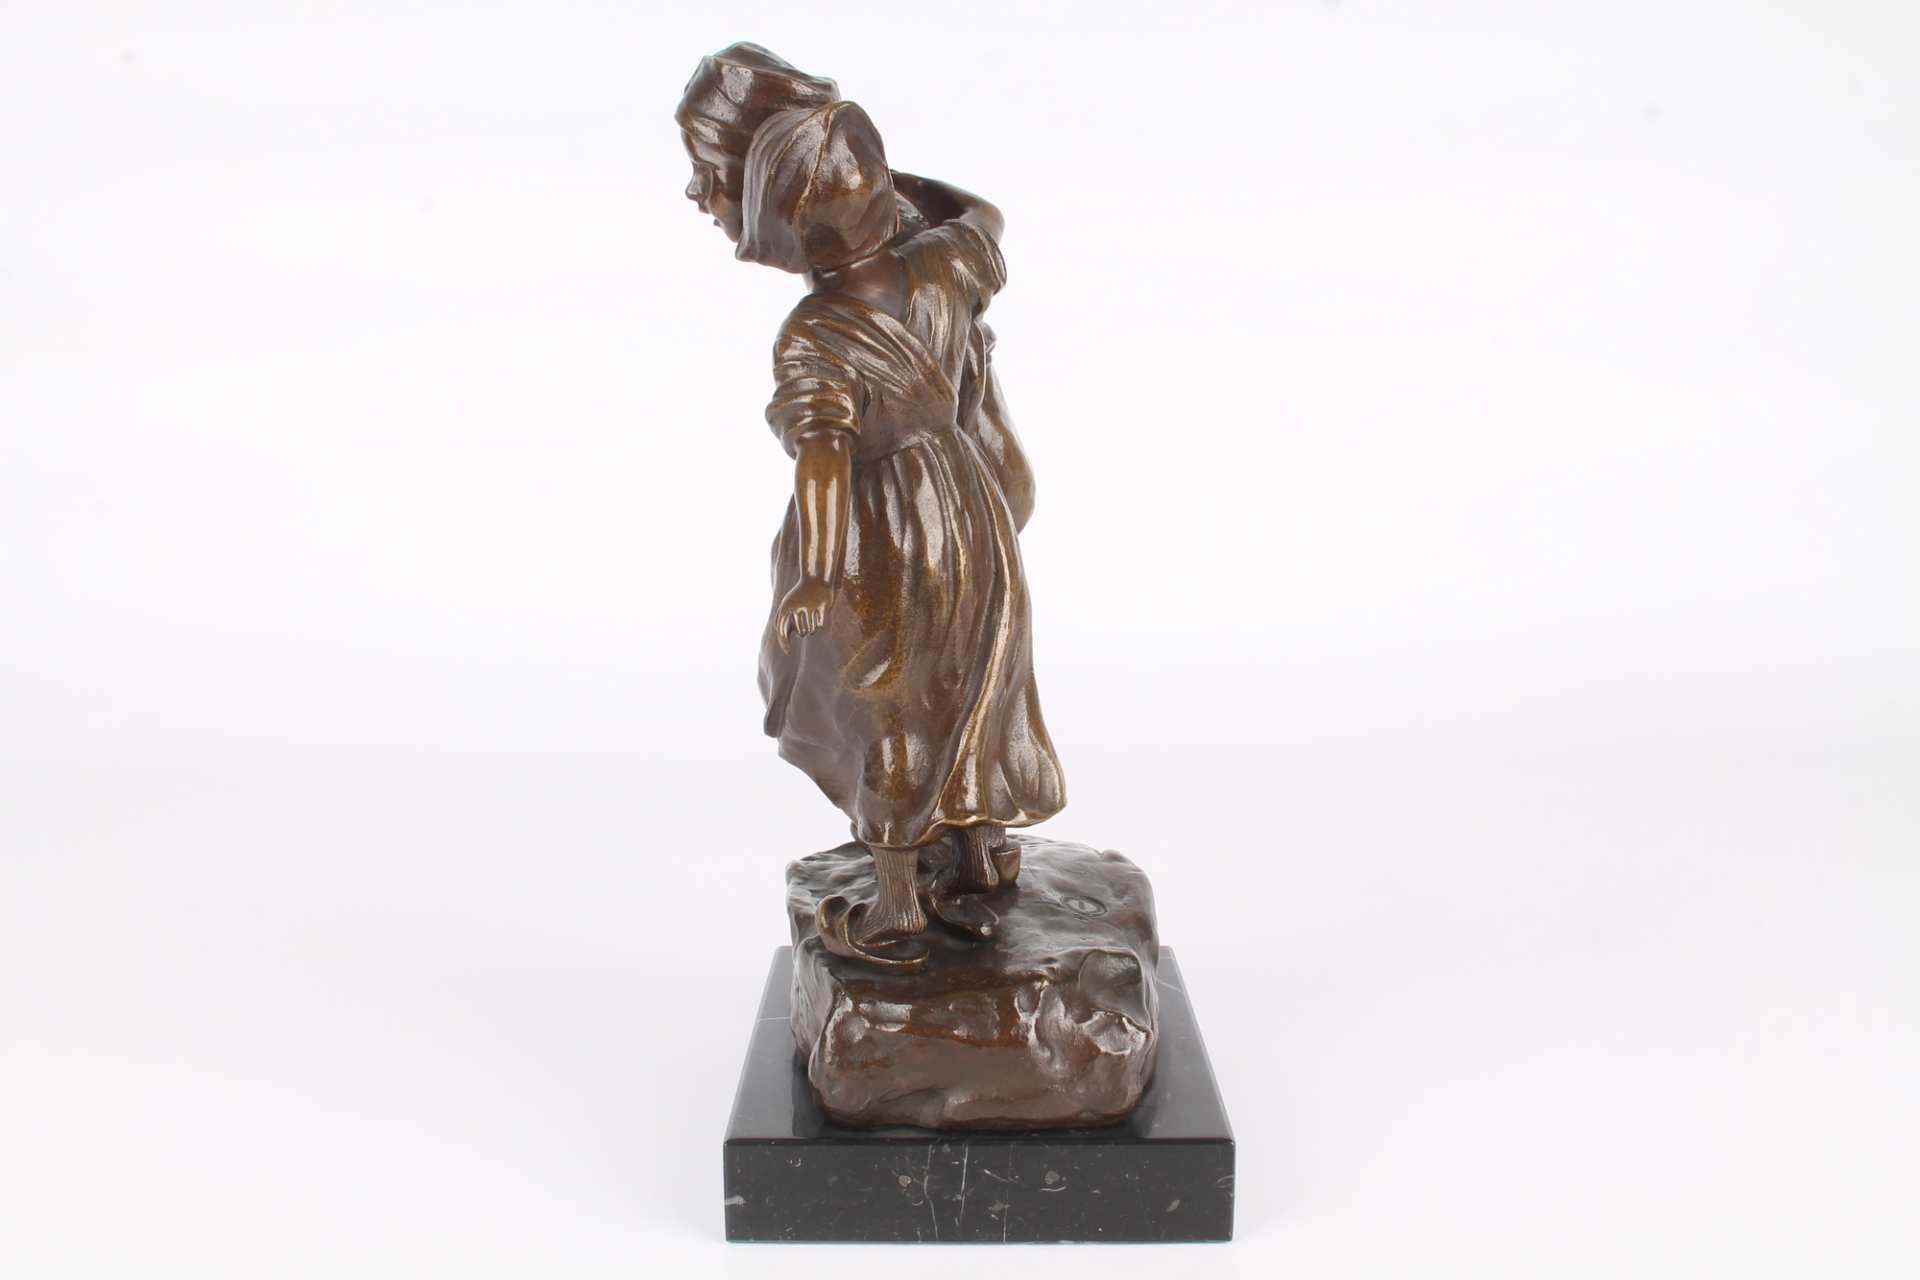 Bronze Figurengruppe by Martin & Piltzing Berlin, the secret figurine, - Image 5 of 6